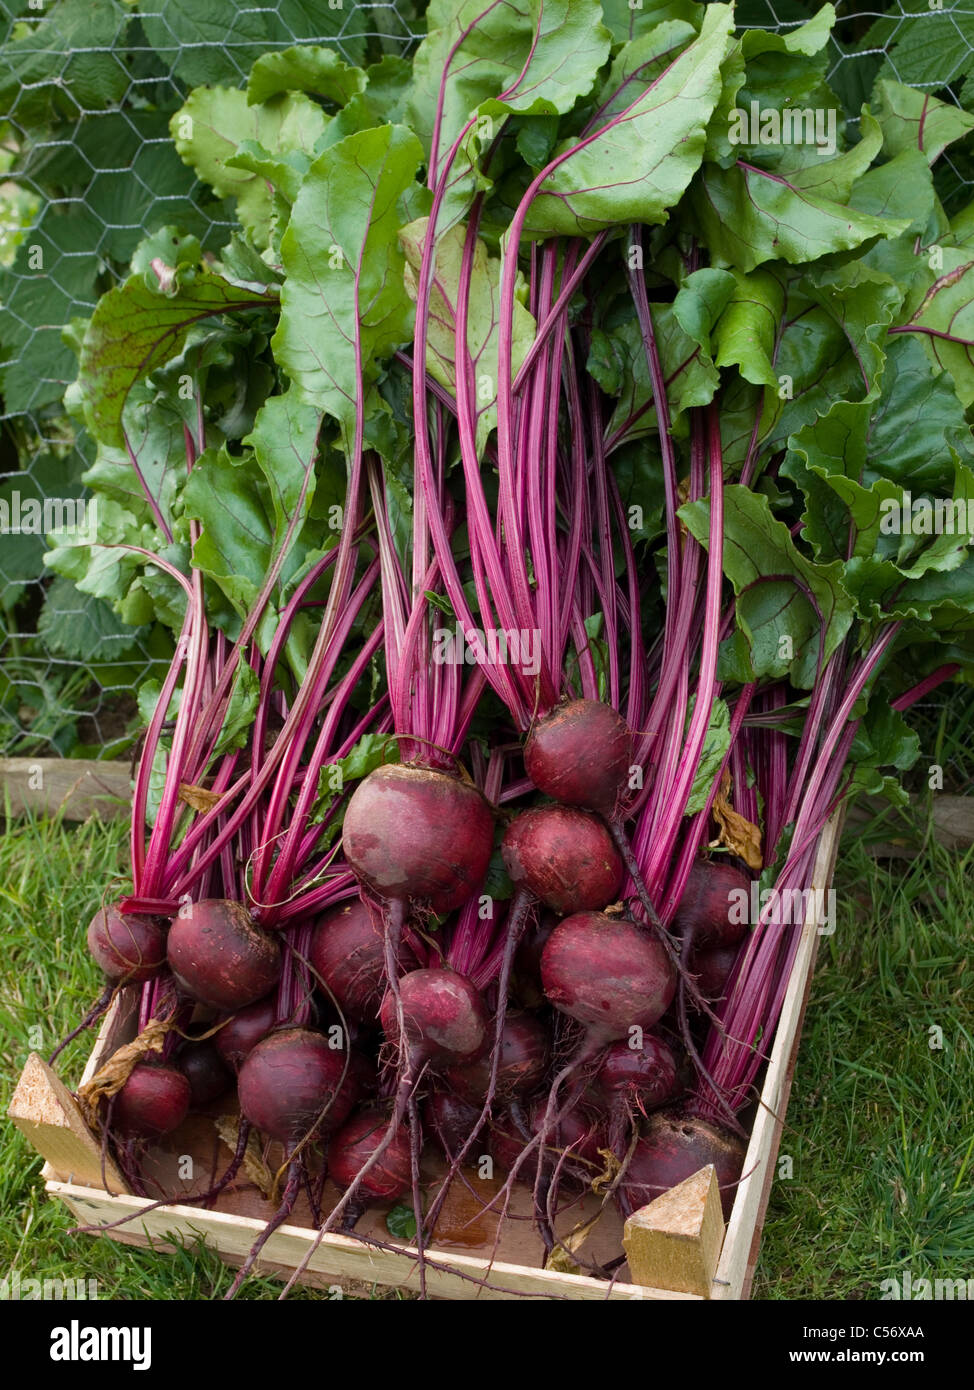 beetroot vegetable Stock Photo